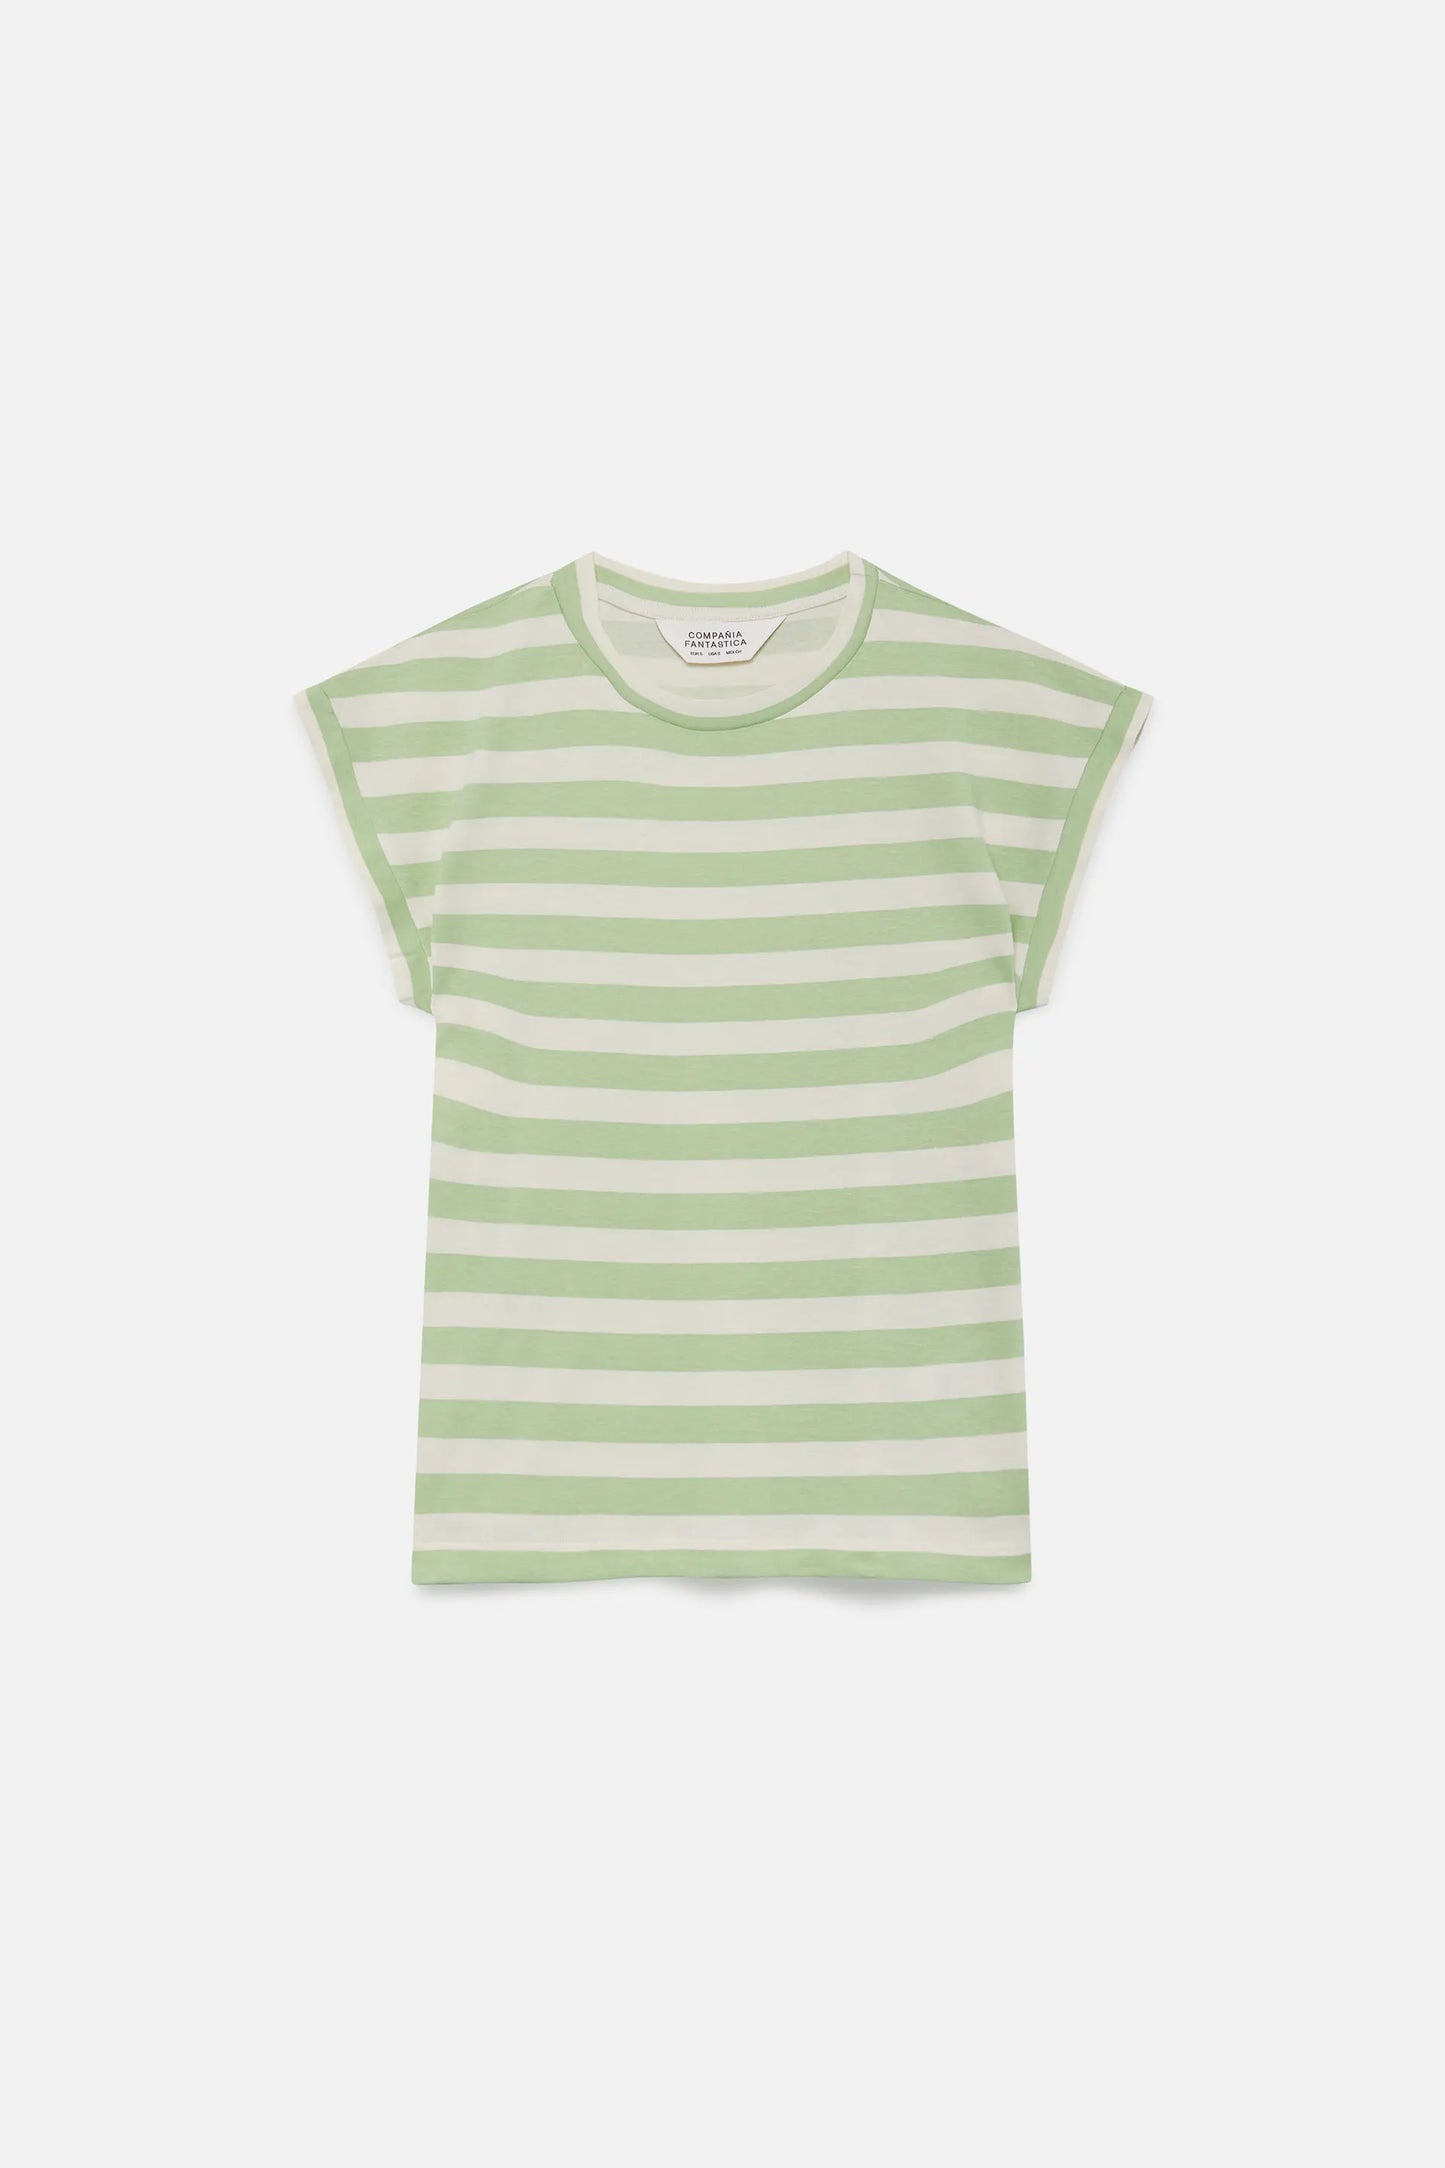 Camiseta manga corta rayas verdes